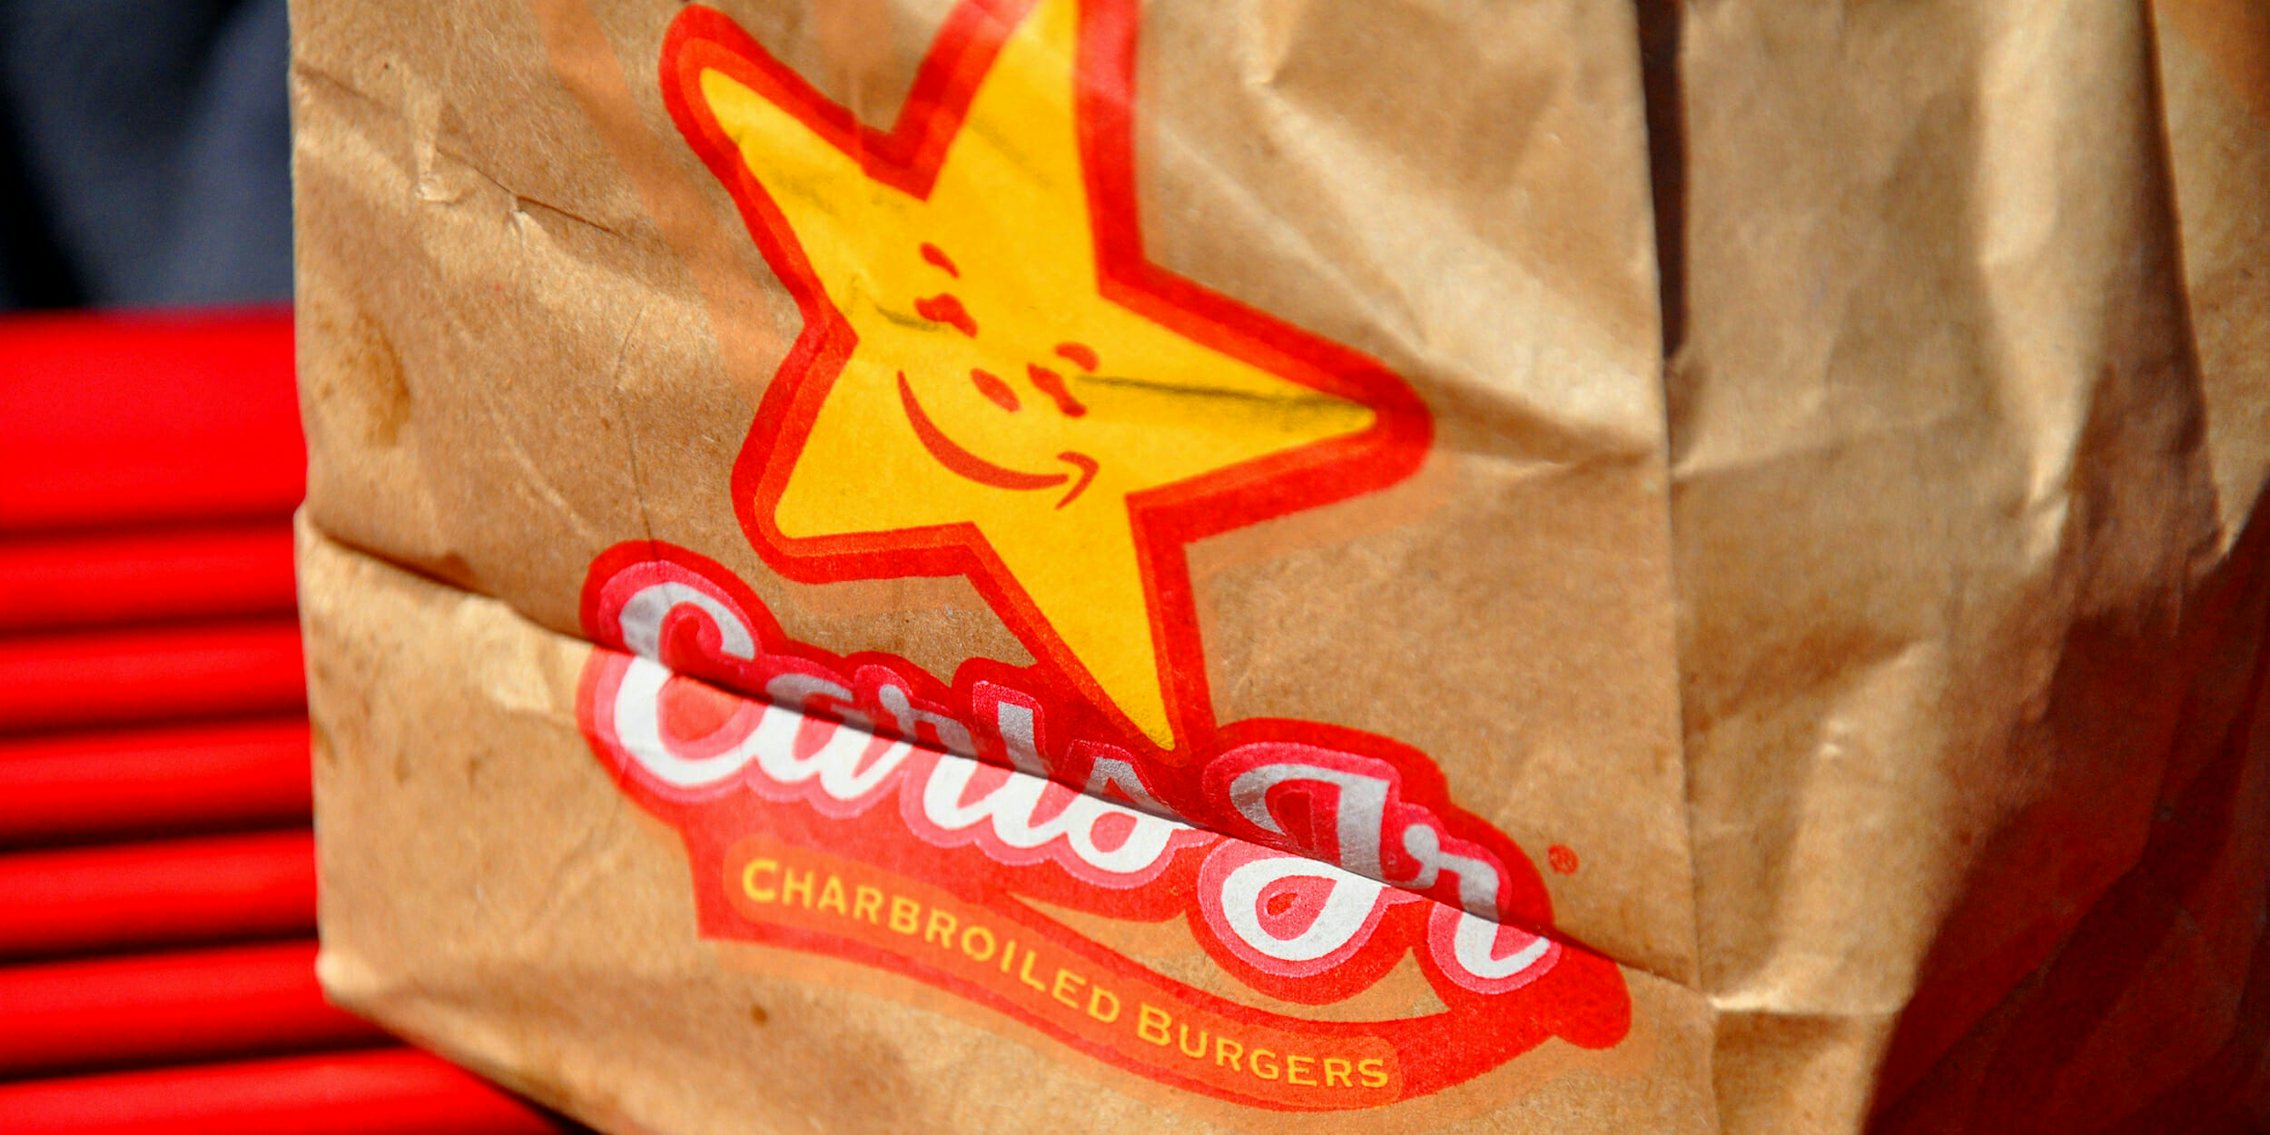 Carls Jr and Amazon logo mashup on a paper bag